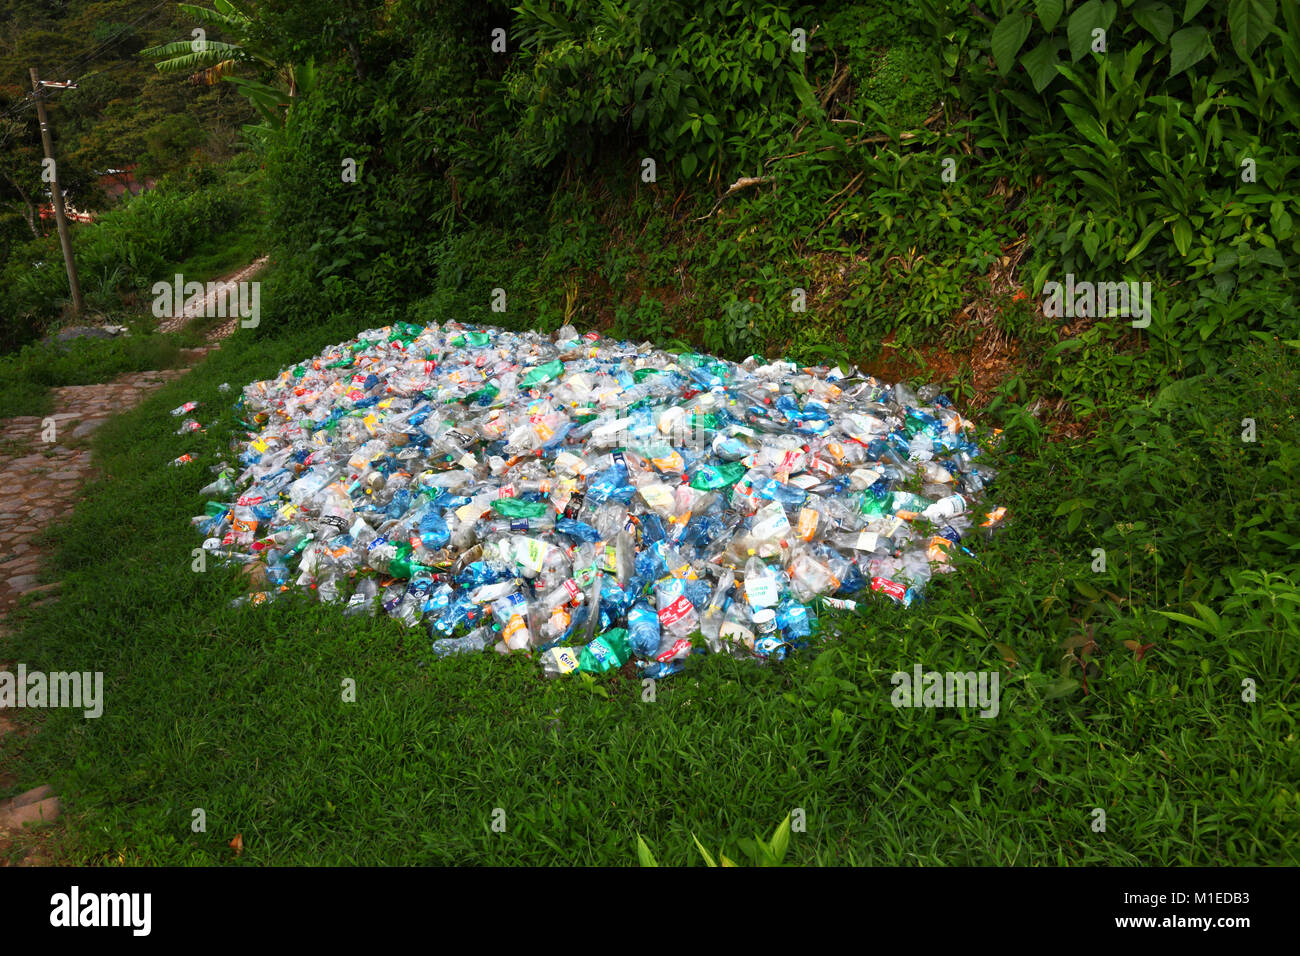 Pile of flattened plastic bottles dumped in vegetation next to footpath, Coroico, Yungas region, Bolivia Stock Photo